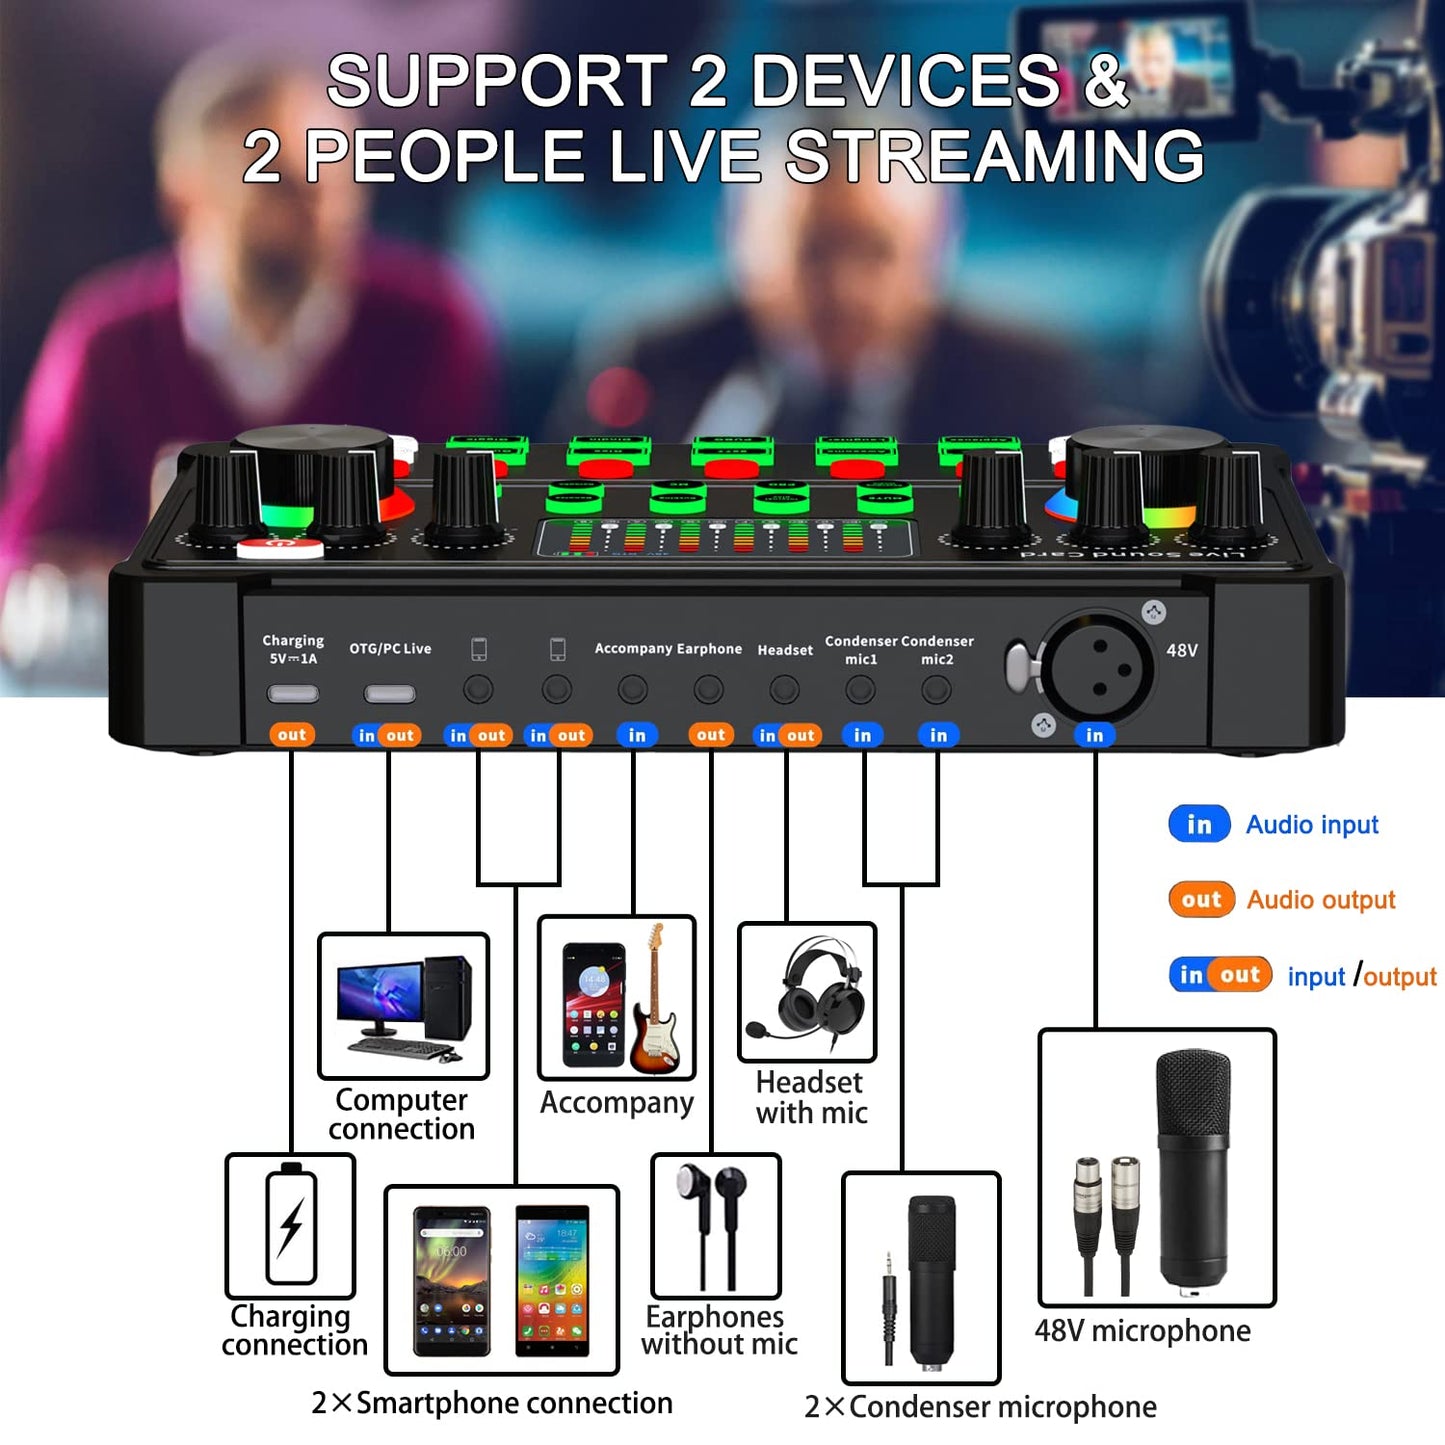 sktome M300-ZM01 XLR Microphone Bundle, 48V, Adjustable Stand, Dual DSP Noise Reduction, 4 Voice Changers, RGB Lighting, 12 Month Warranty